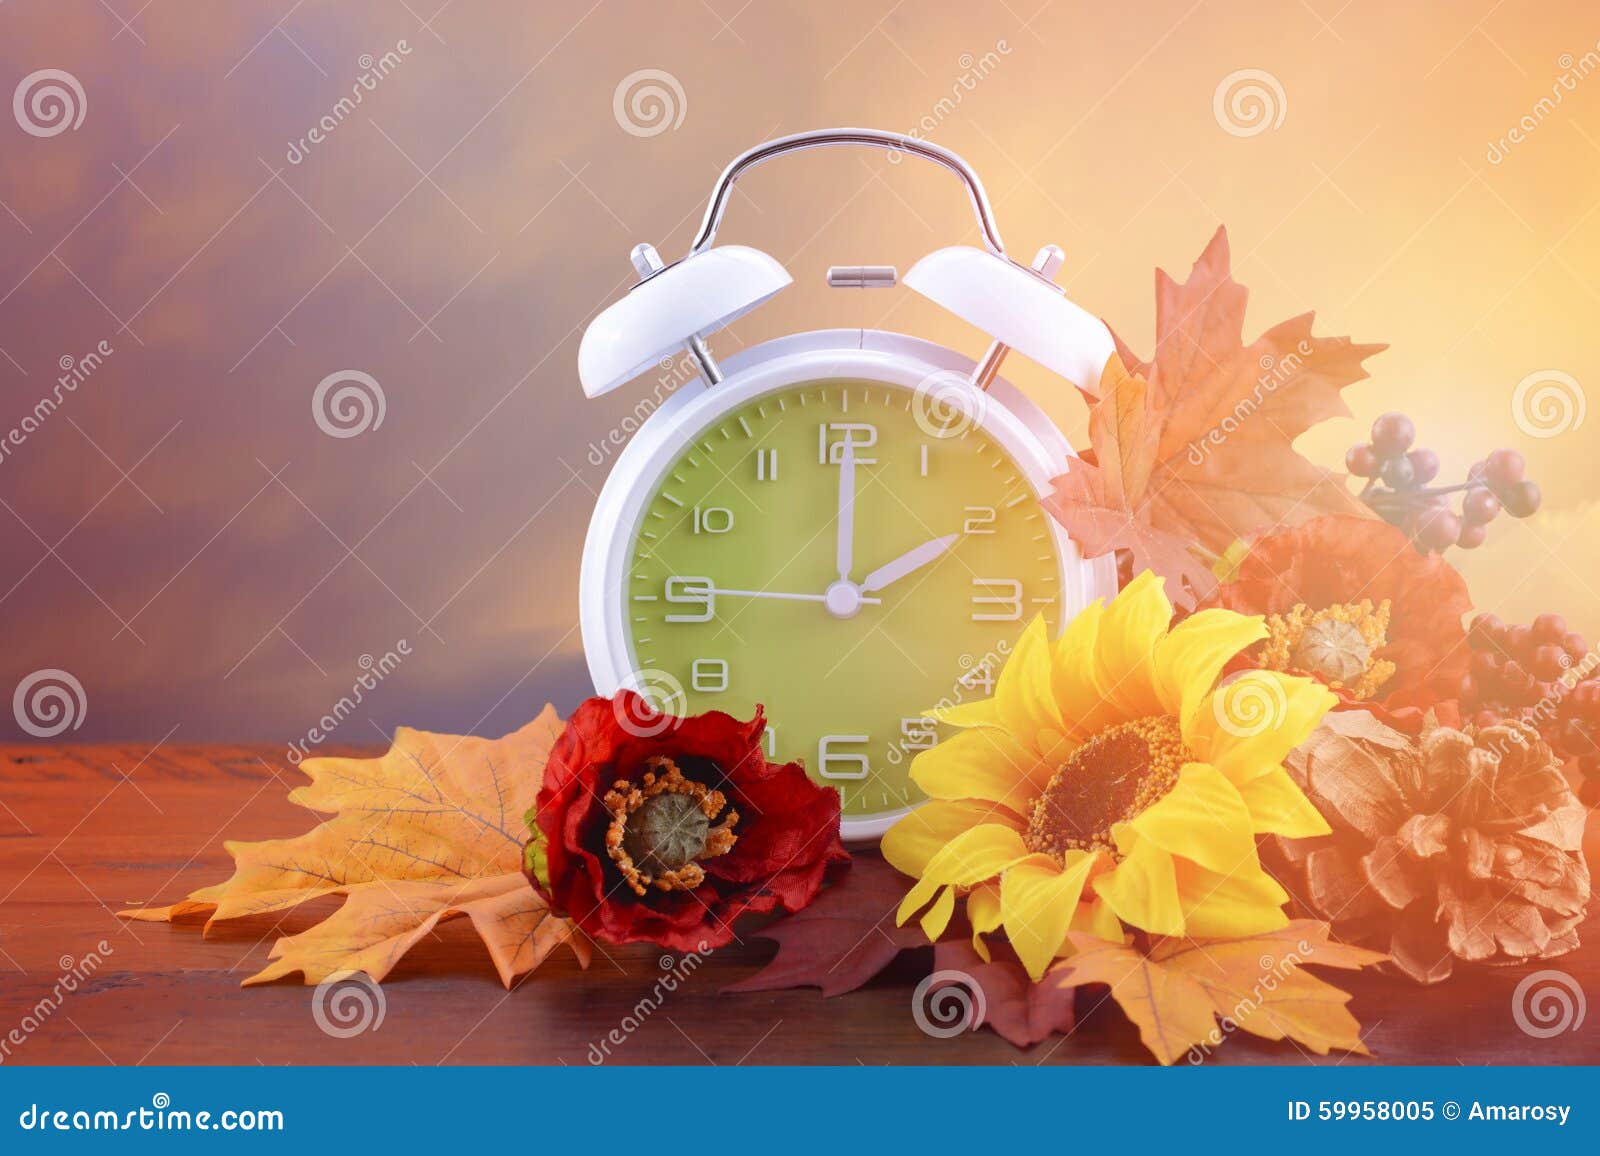 daylight saving time clock concept